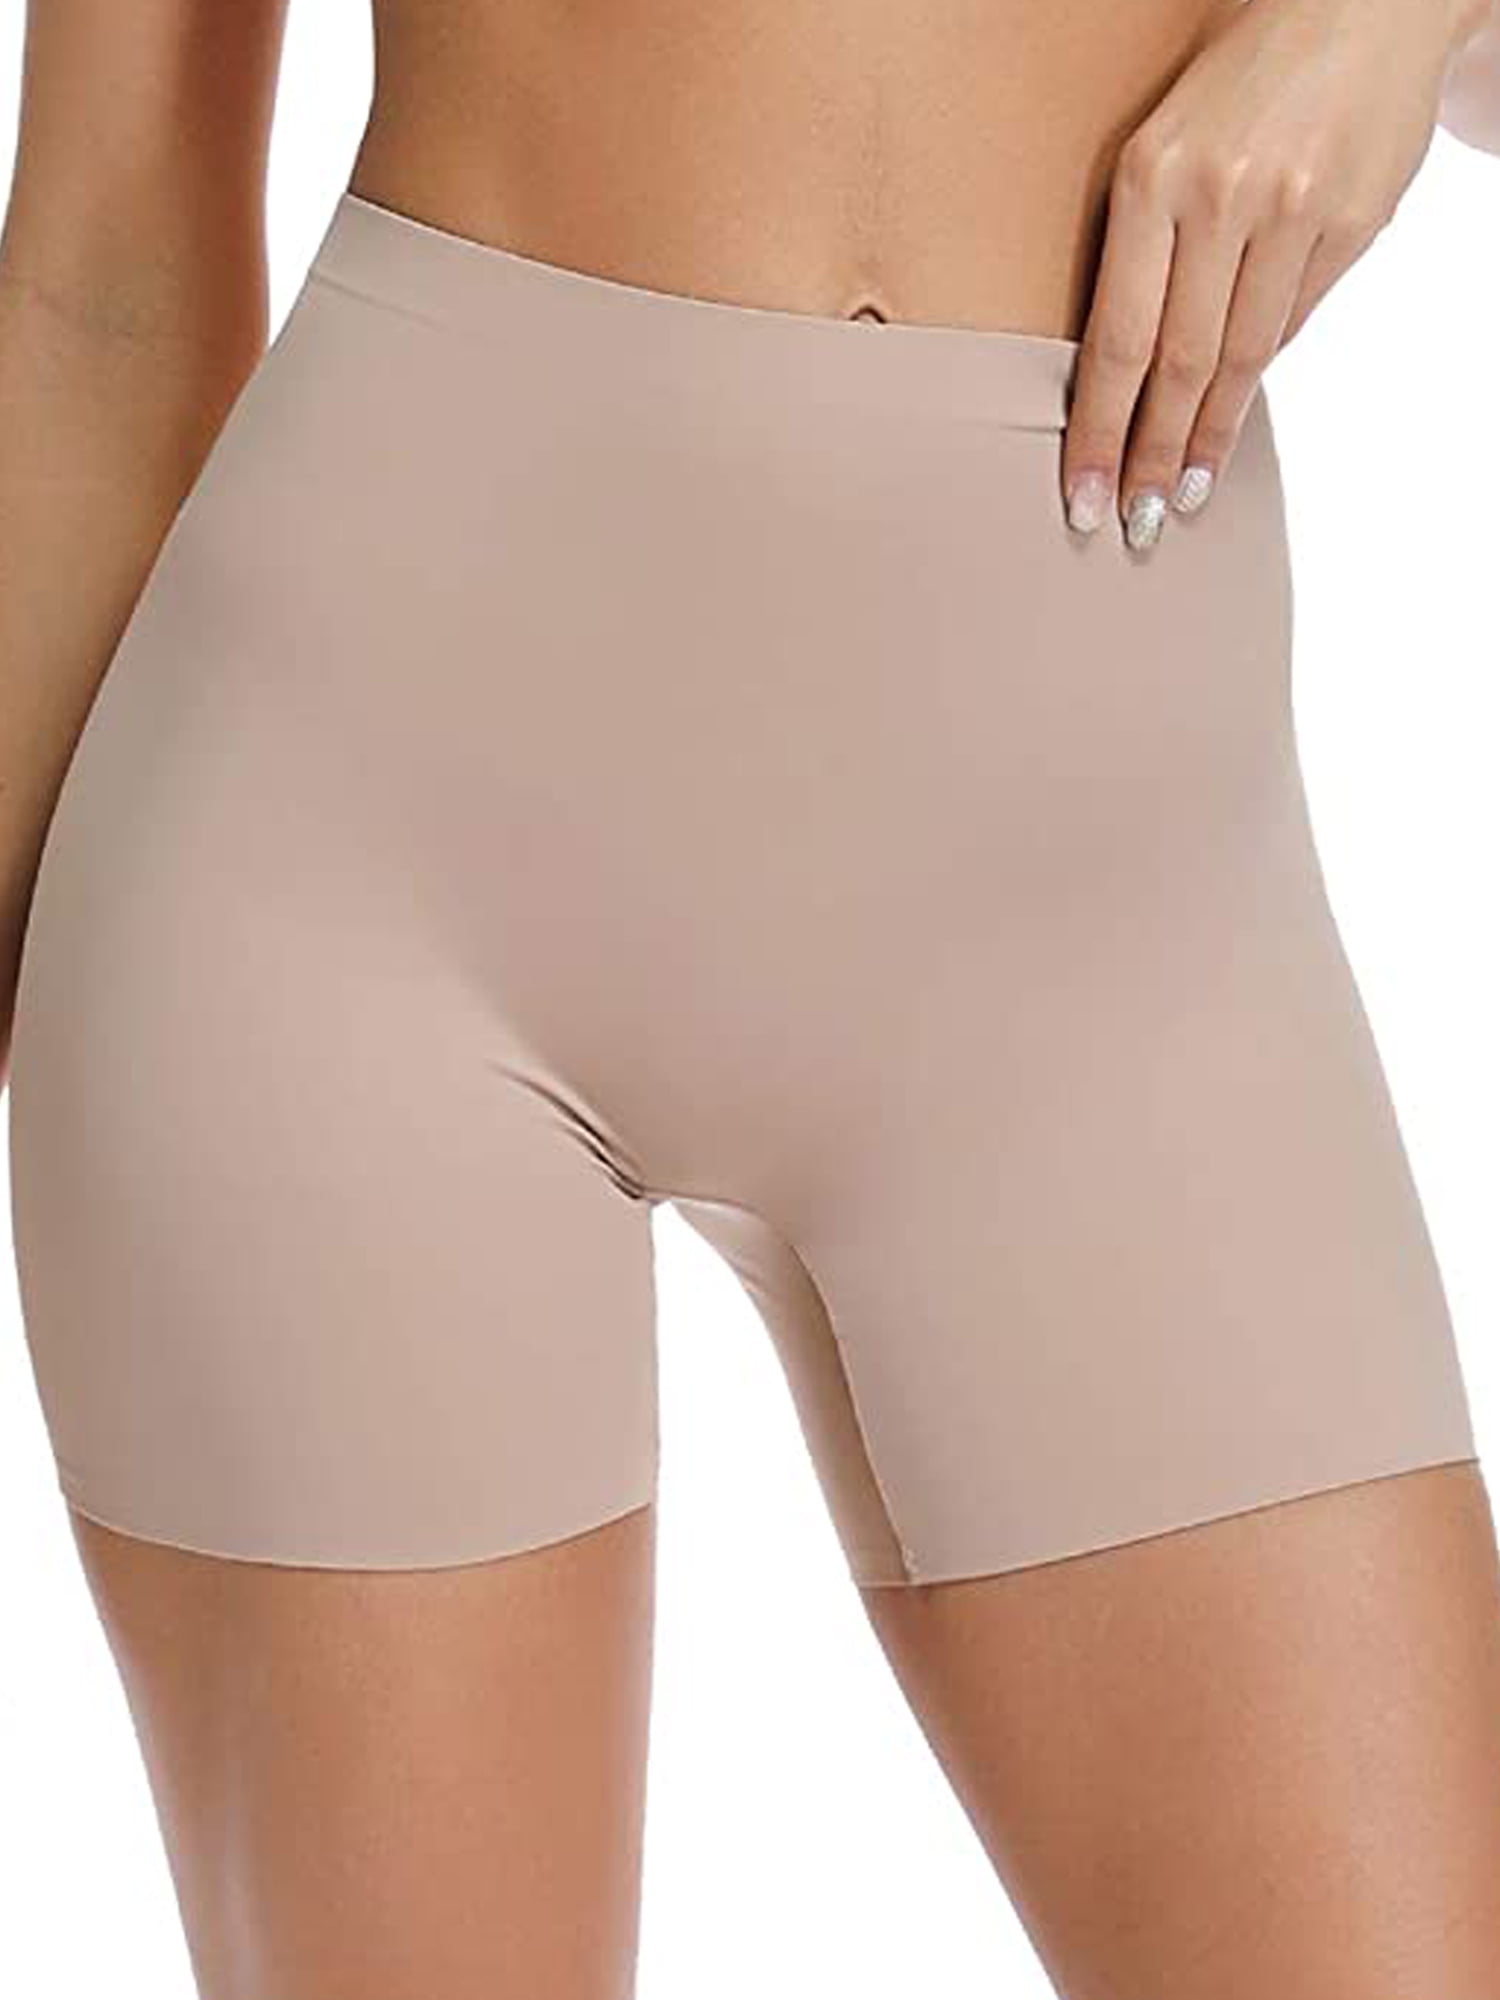 FITVALEN Anti Chafing Underwear Slip Shorts for Women Under Dress Invisible  Seamless Boyshorts Panties Shapewear